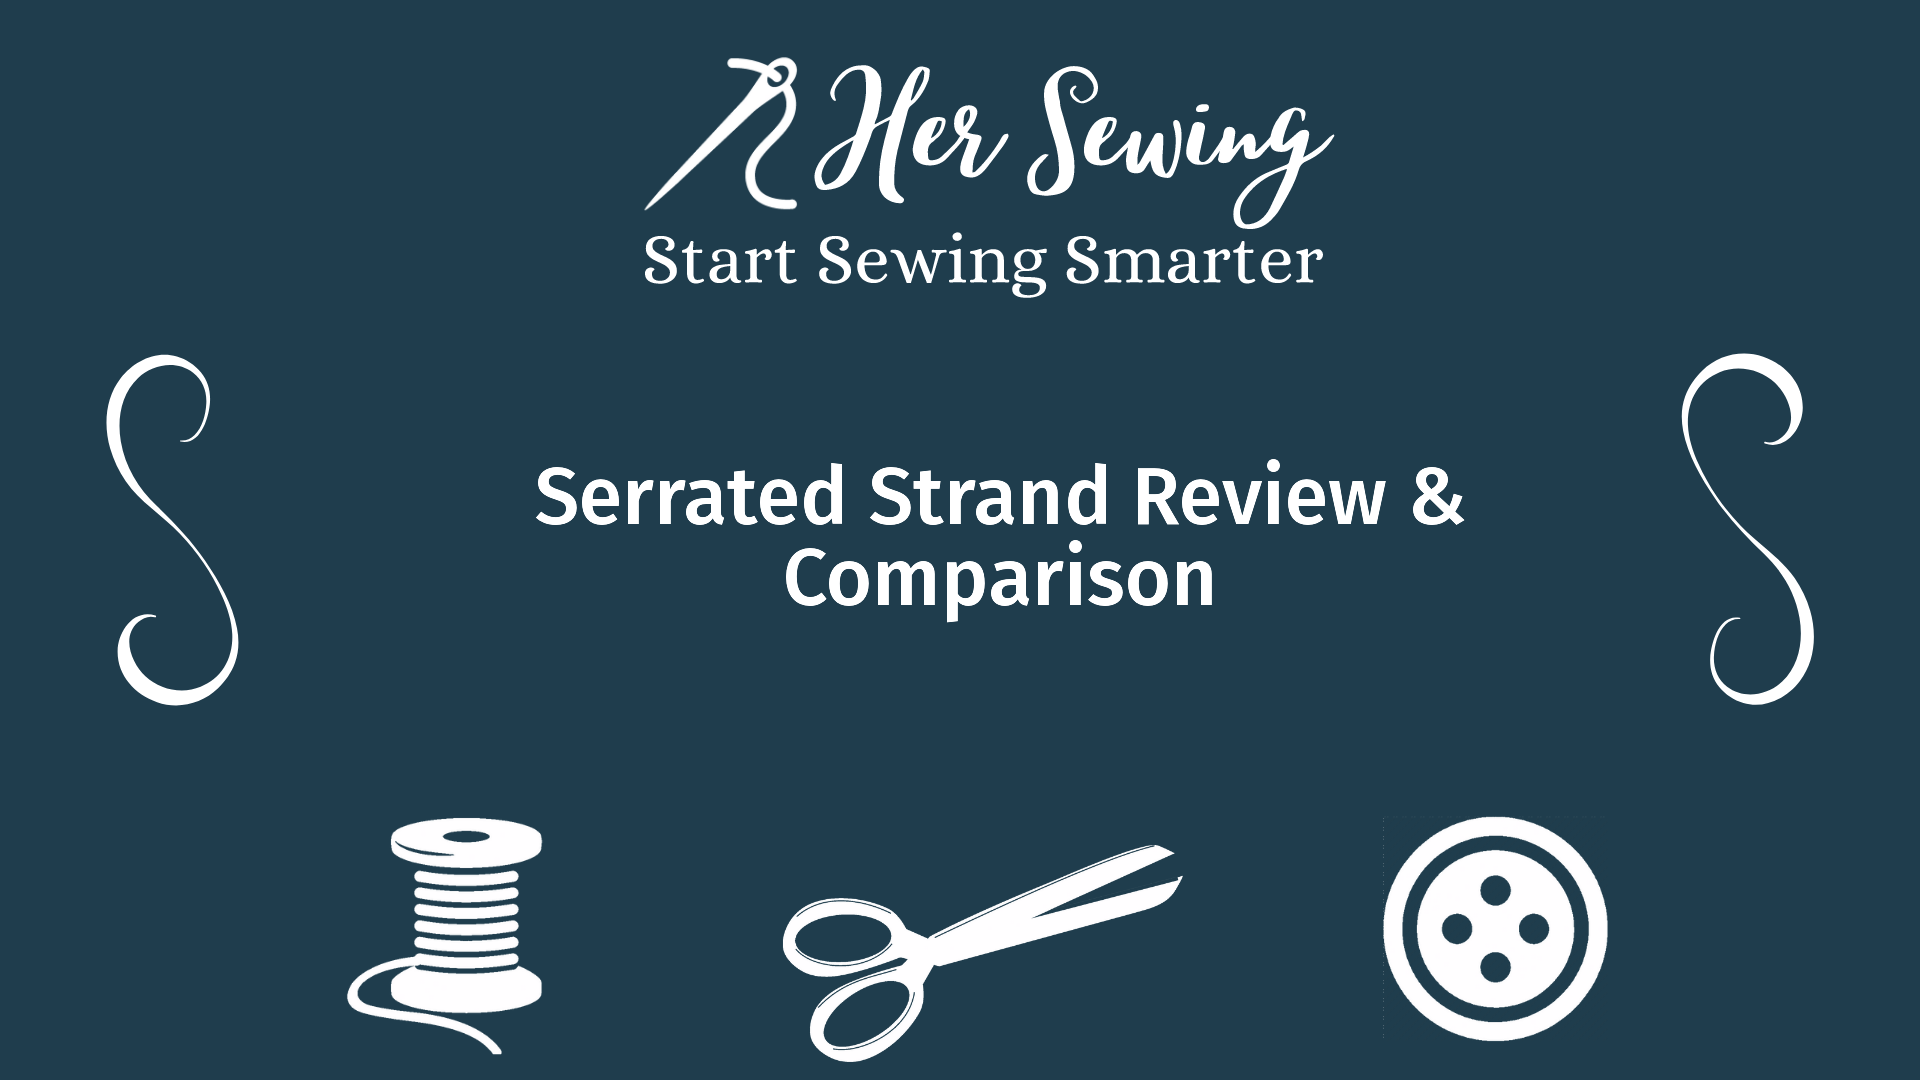 Serrated Strand Review & Comparison